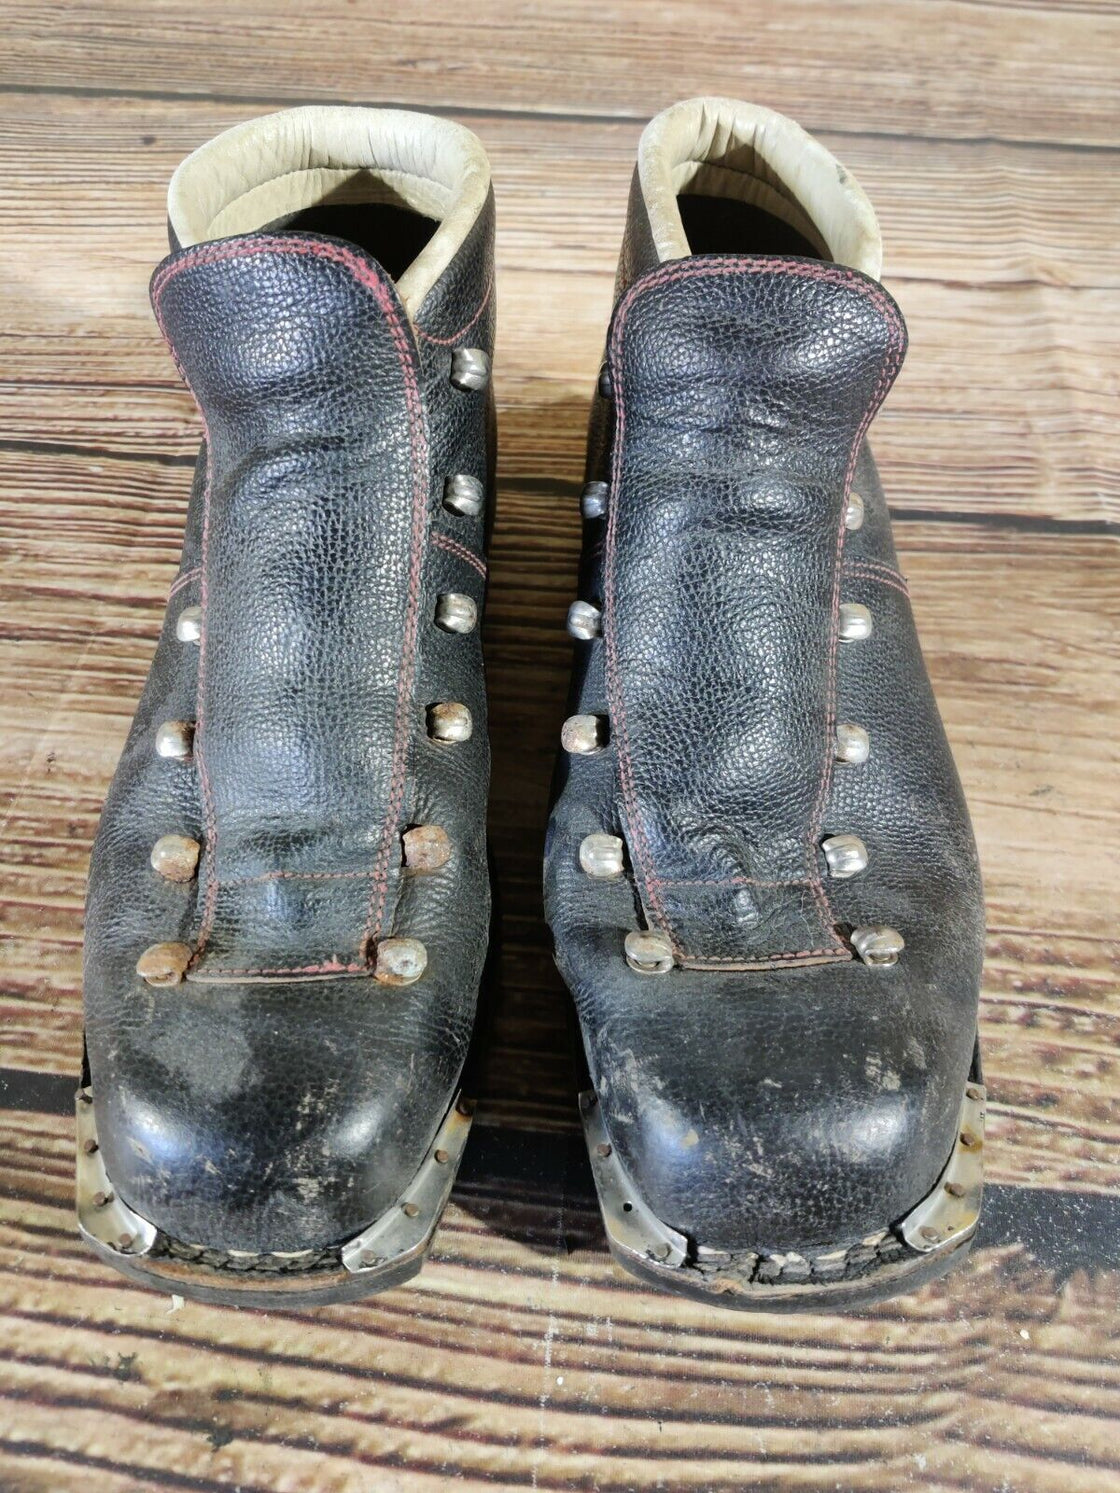 NORLINS TEWA Vintage Cross Country Ski Boots Kandahar Cable Binding EU44 US10